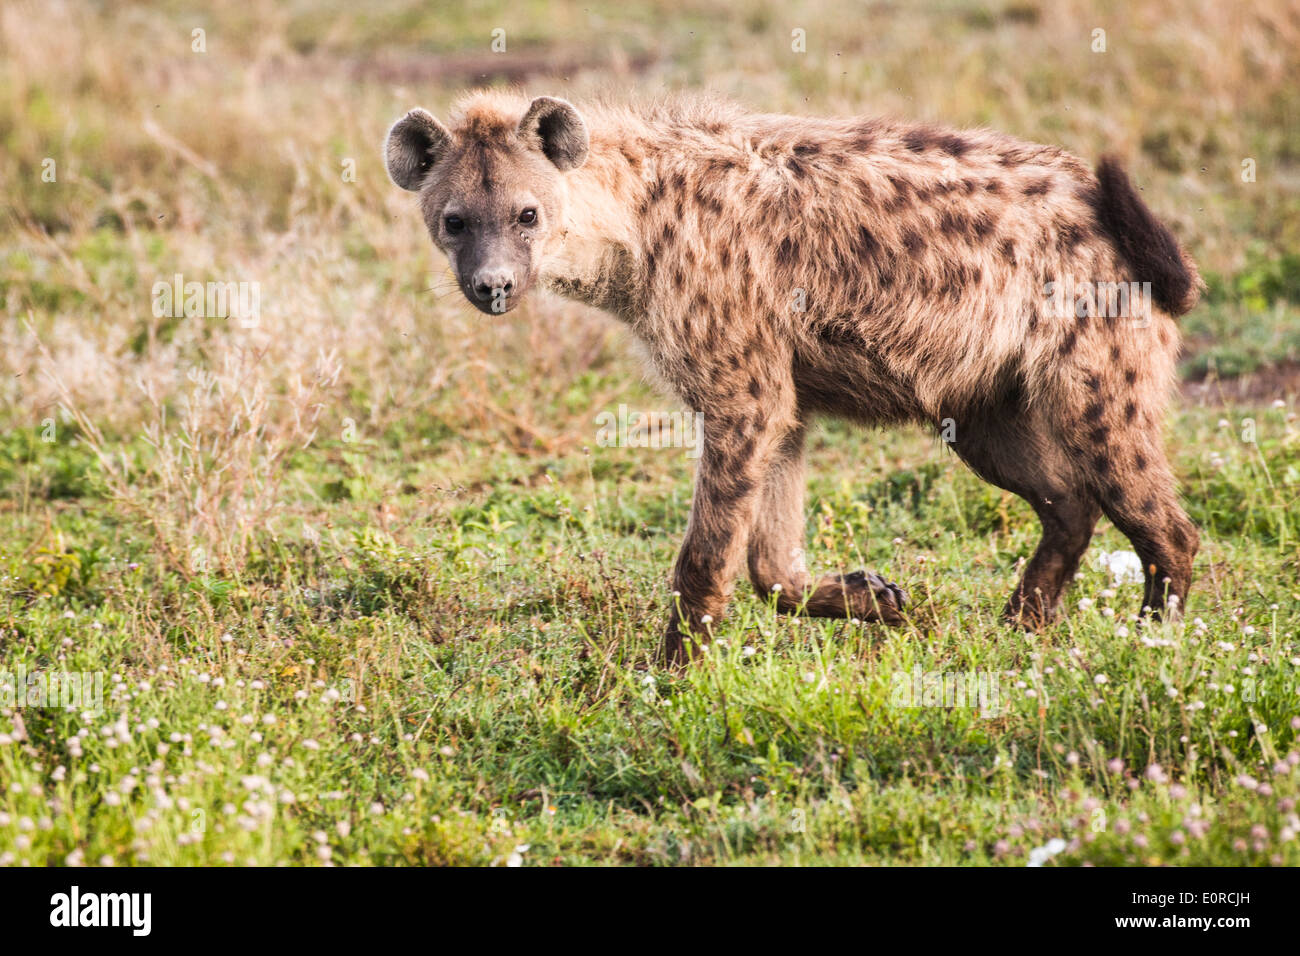 Spotted Hyena (Crocuta crocuta). Photographed in Tanzania Stock Photo